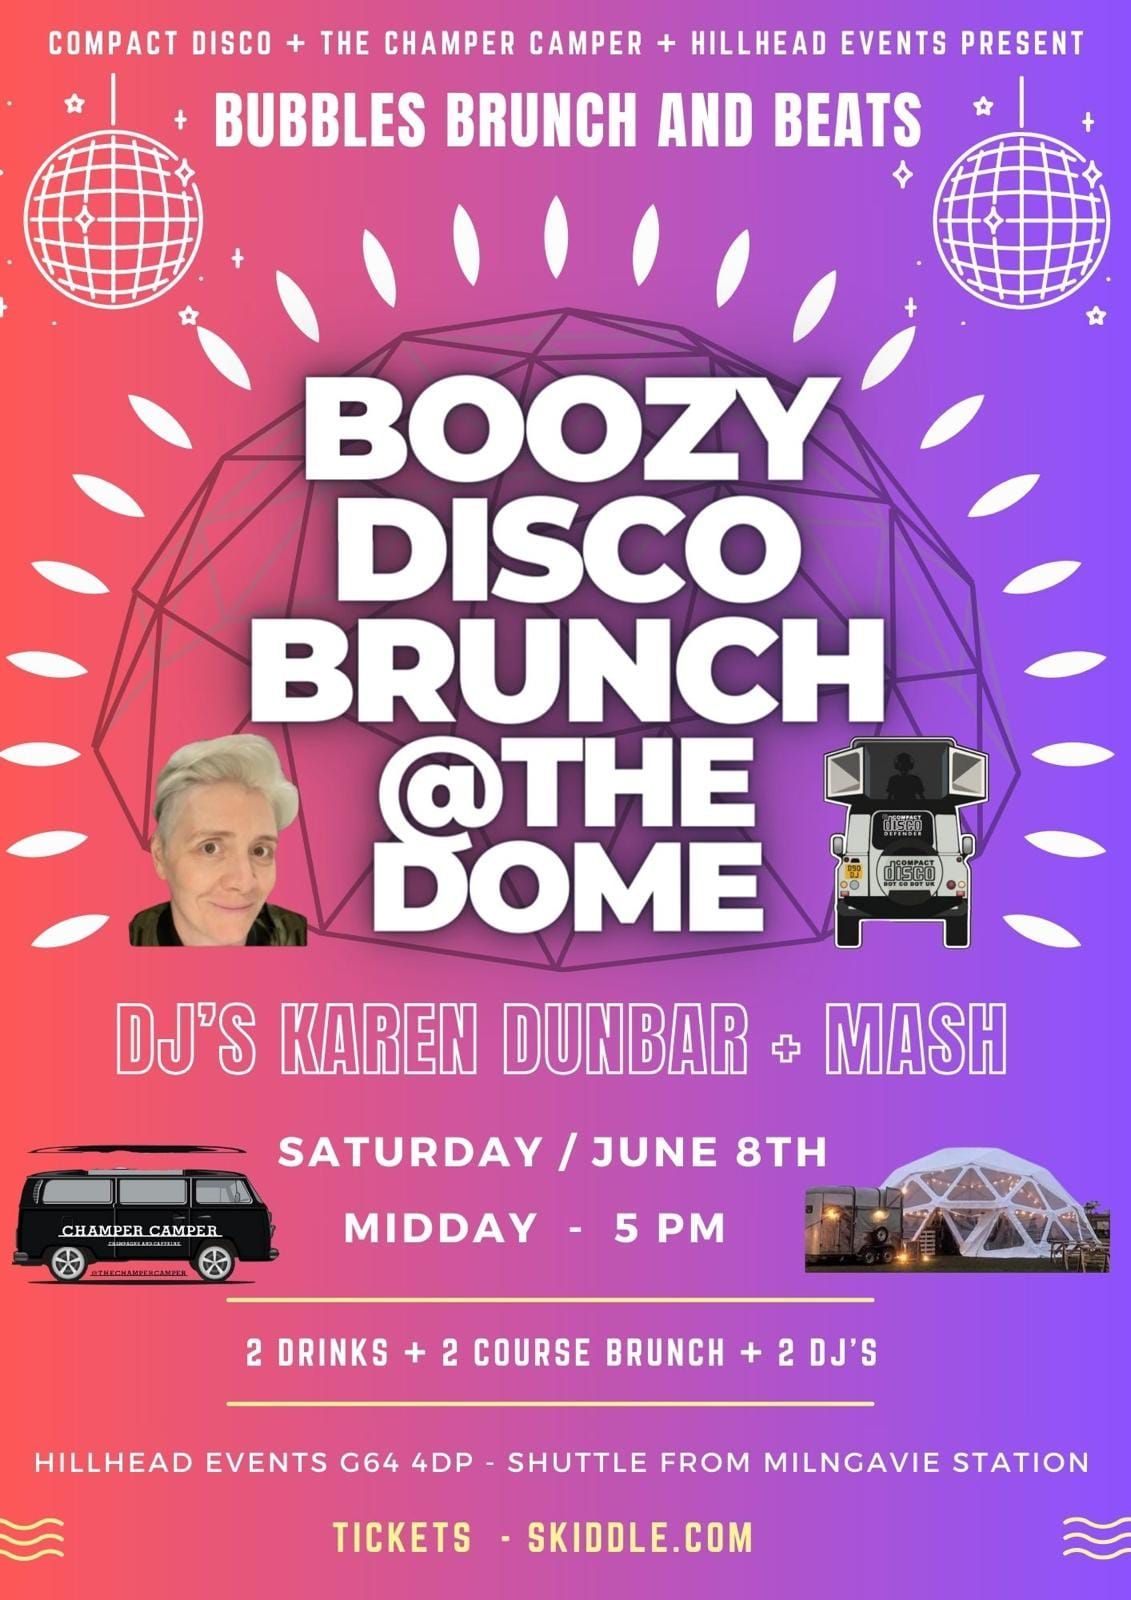 Boozy Disco Brunch @ The Dome With Karen Dunbar